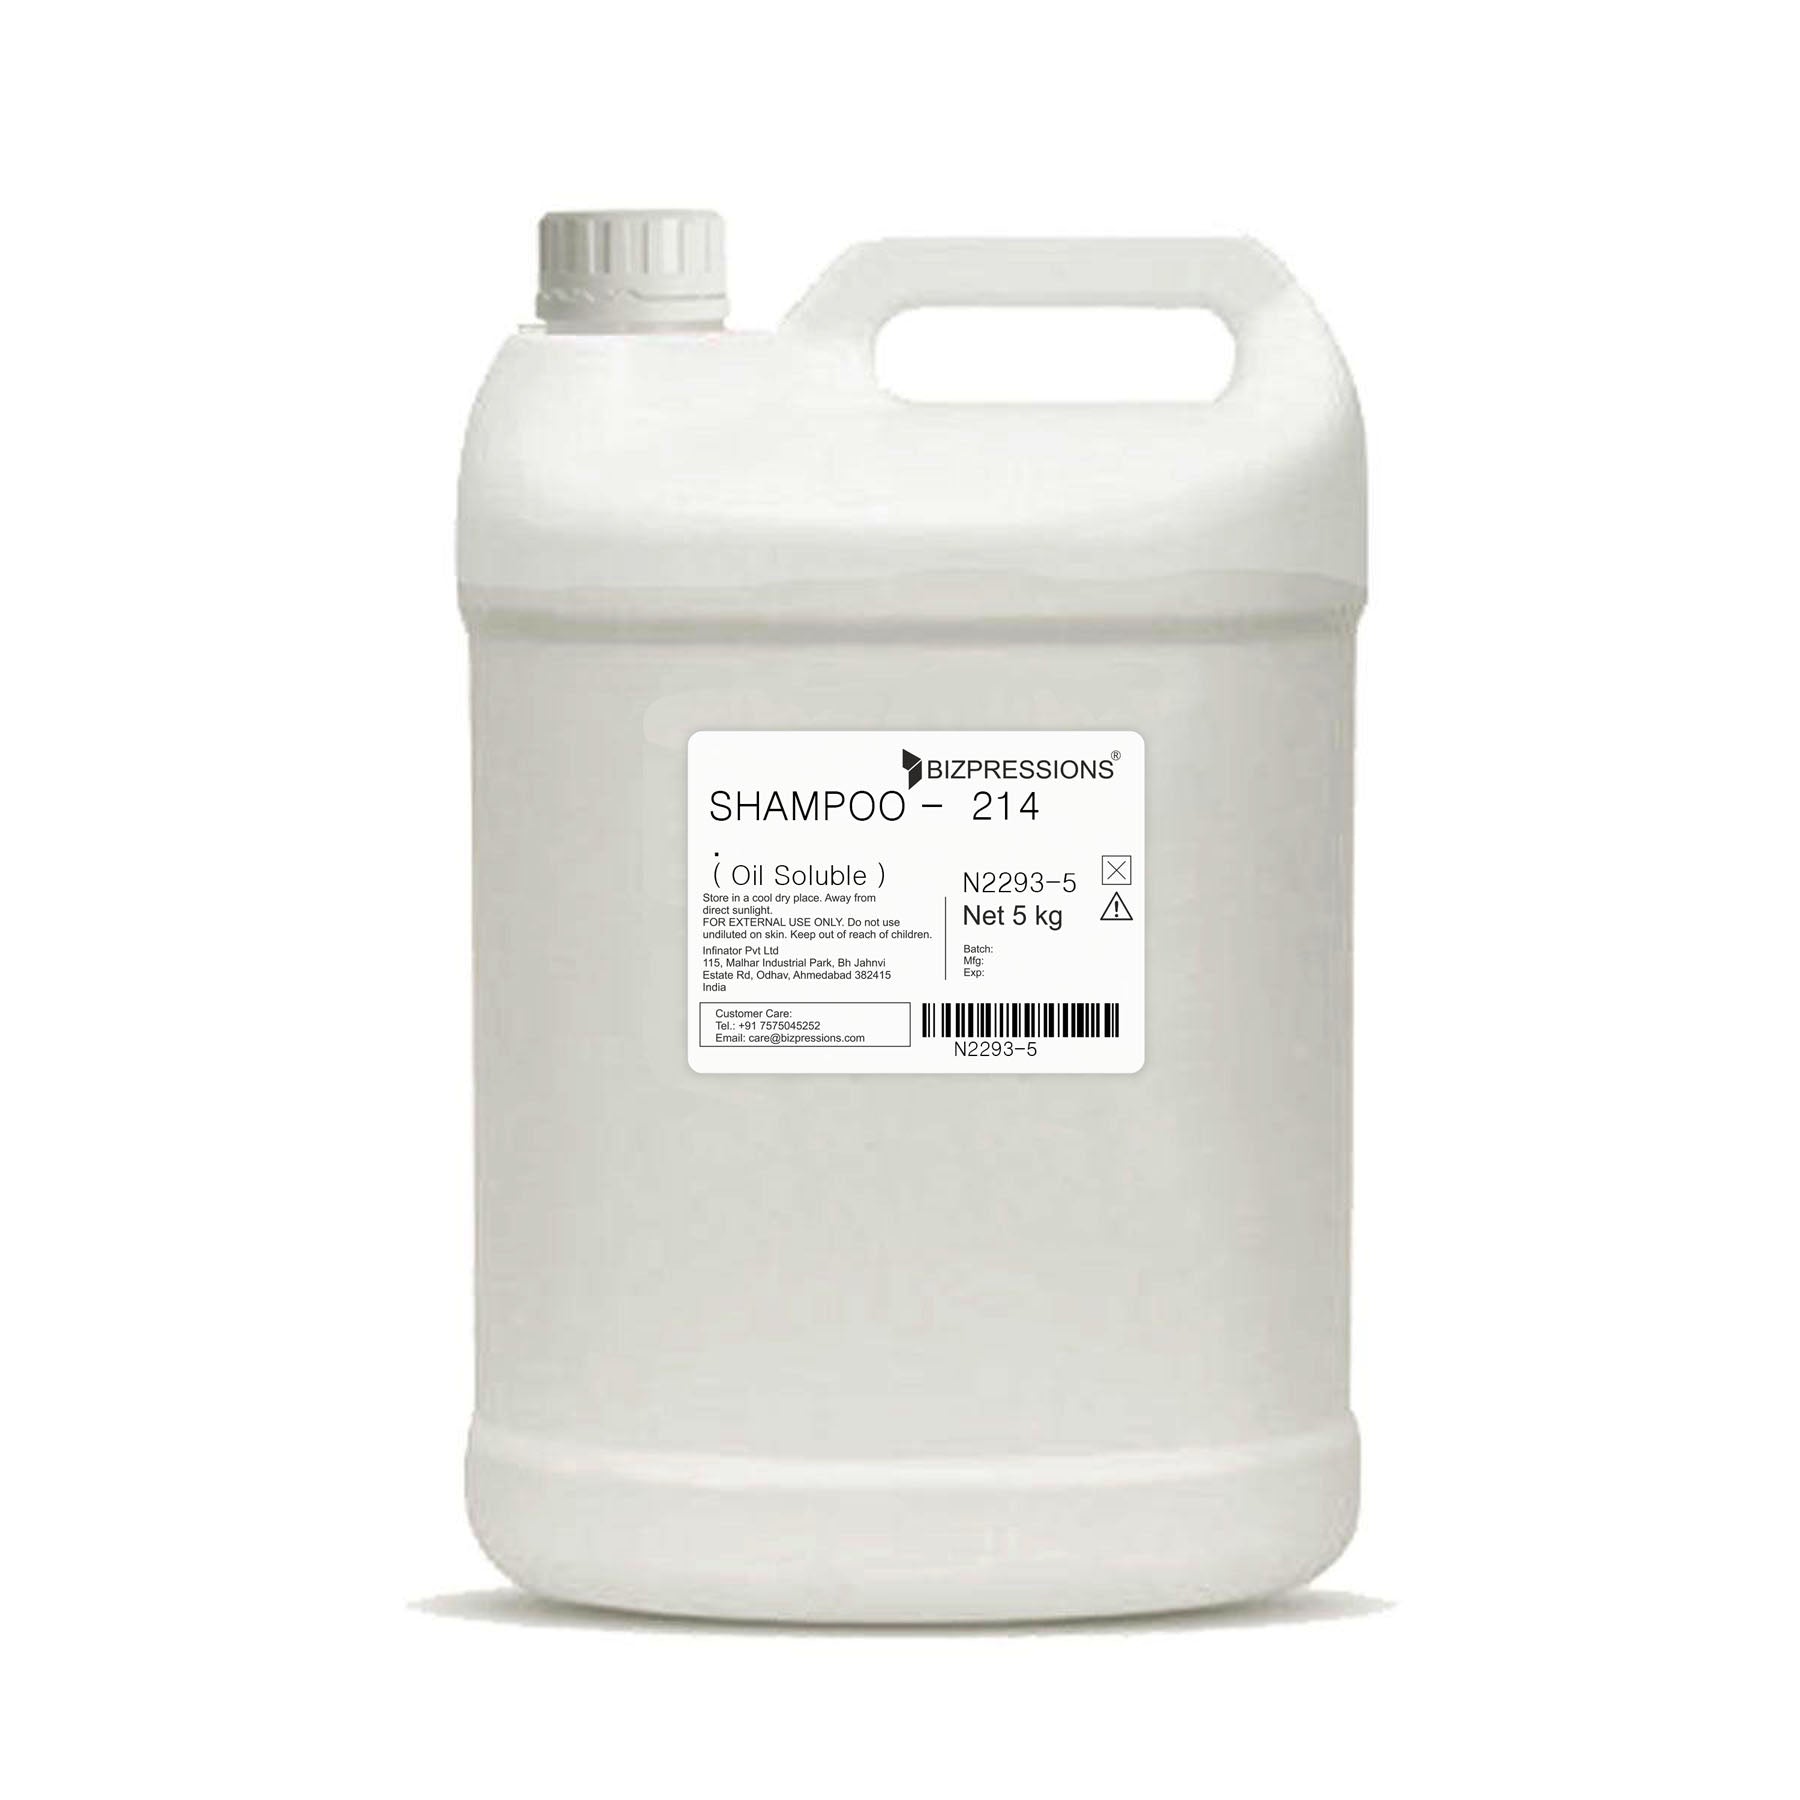 SHAMPOO - 214 - Fragrance ( Oil Soluble ) - 5 kg